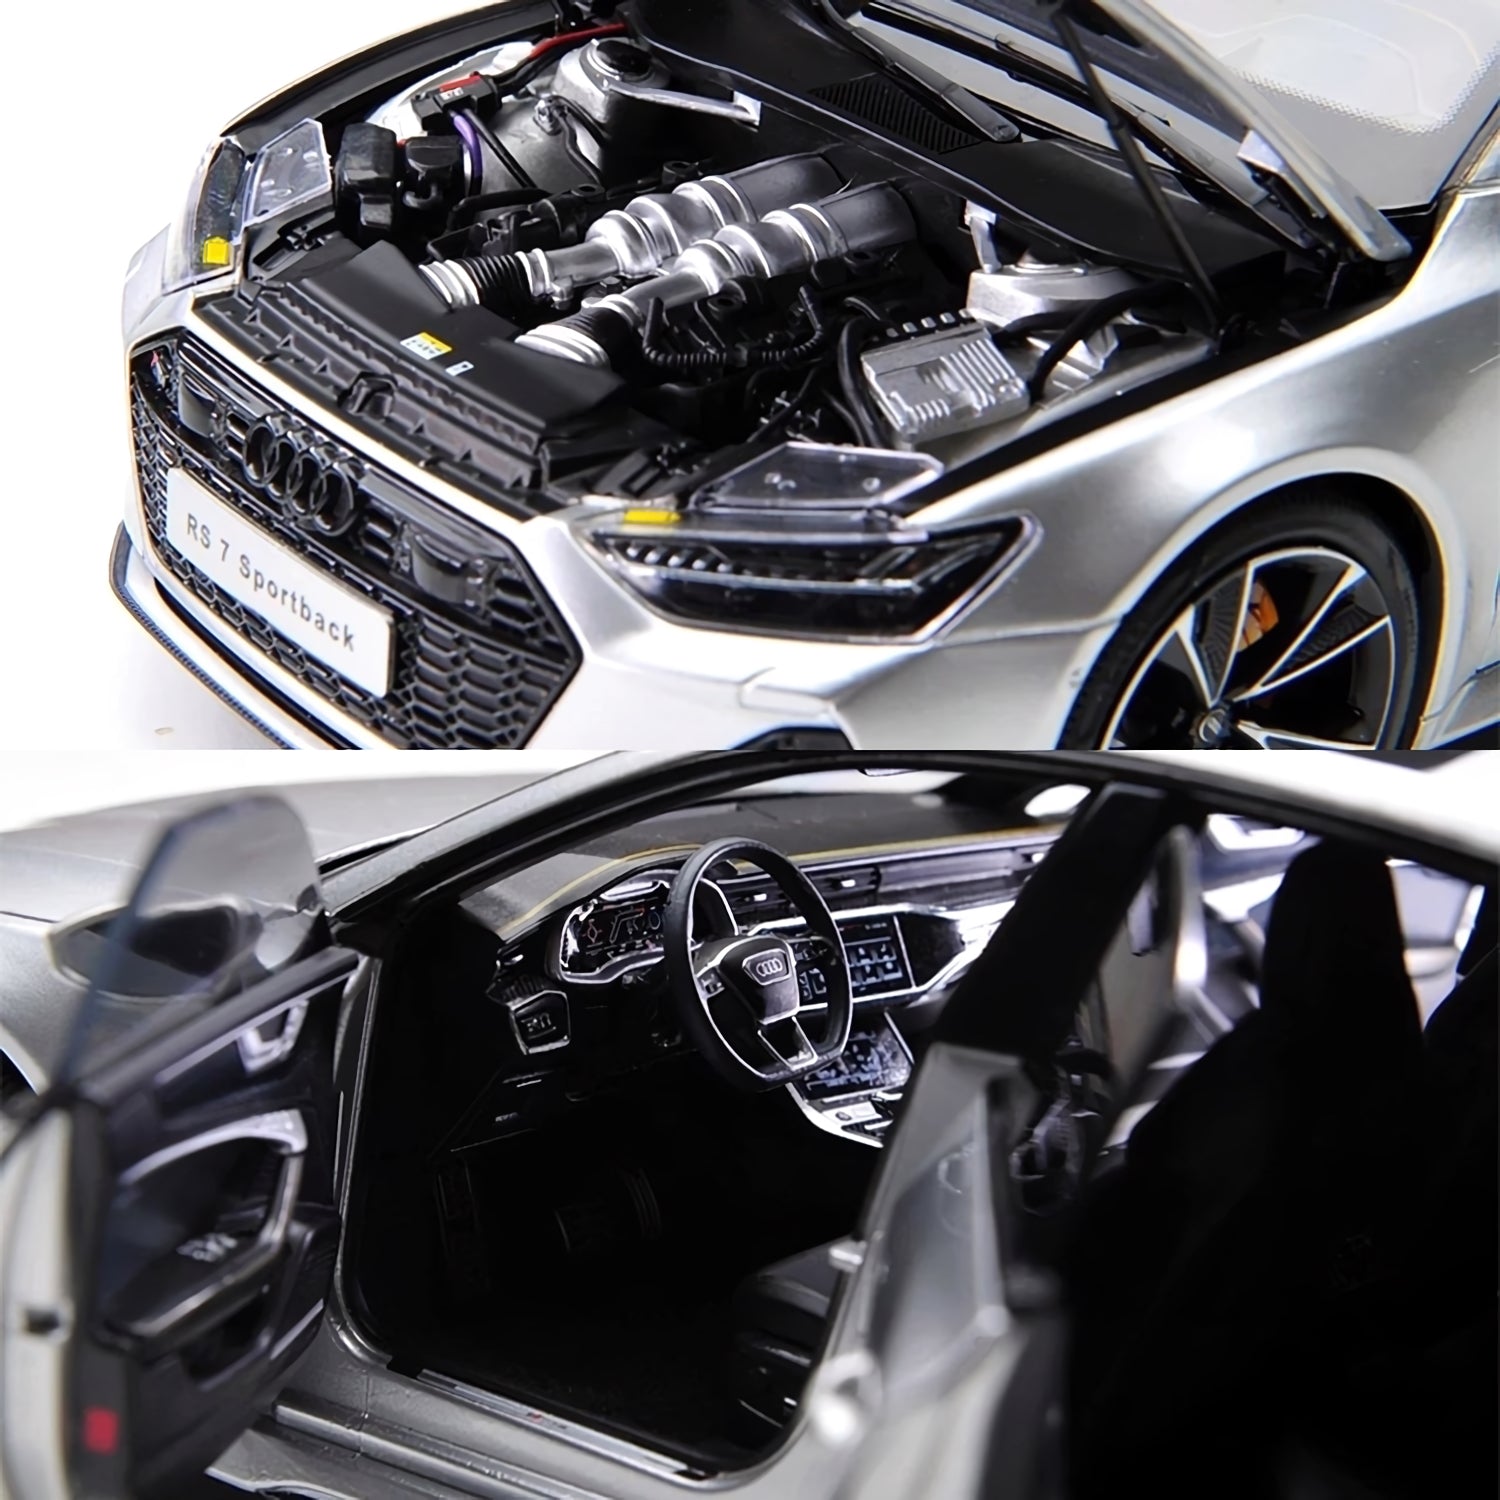 1:18 Scale Audi RS7 Exquisite Die-Cast Model Car - PANSEKtoy